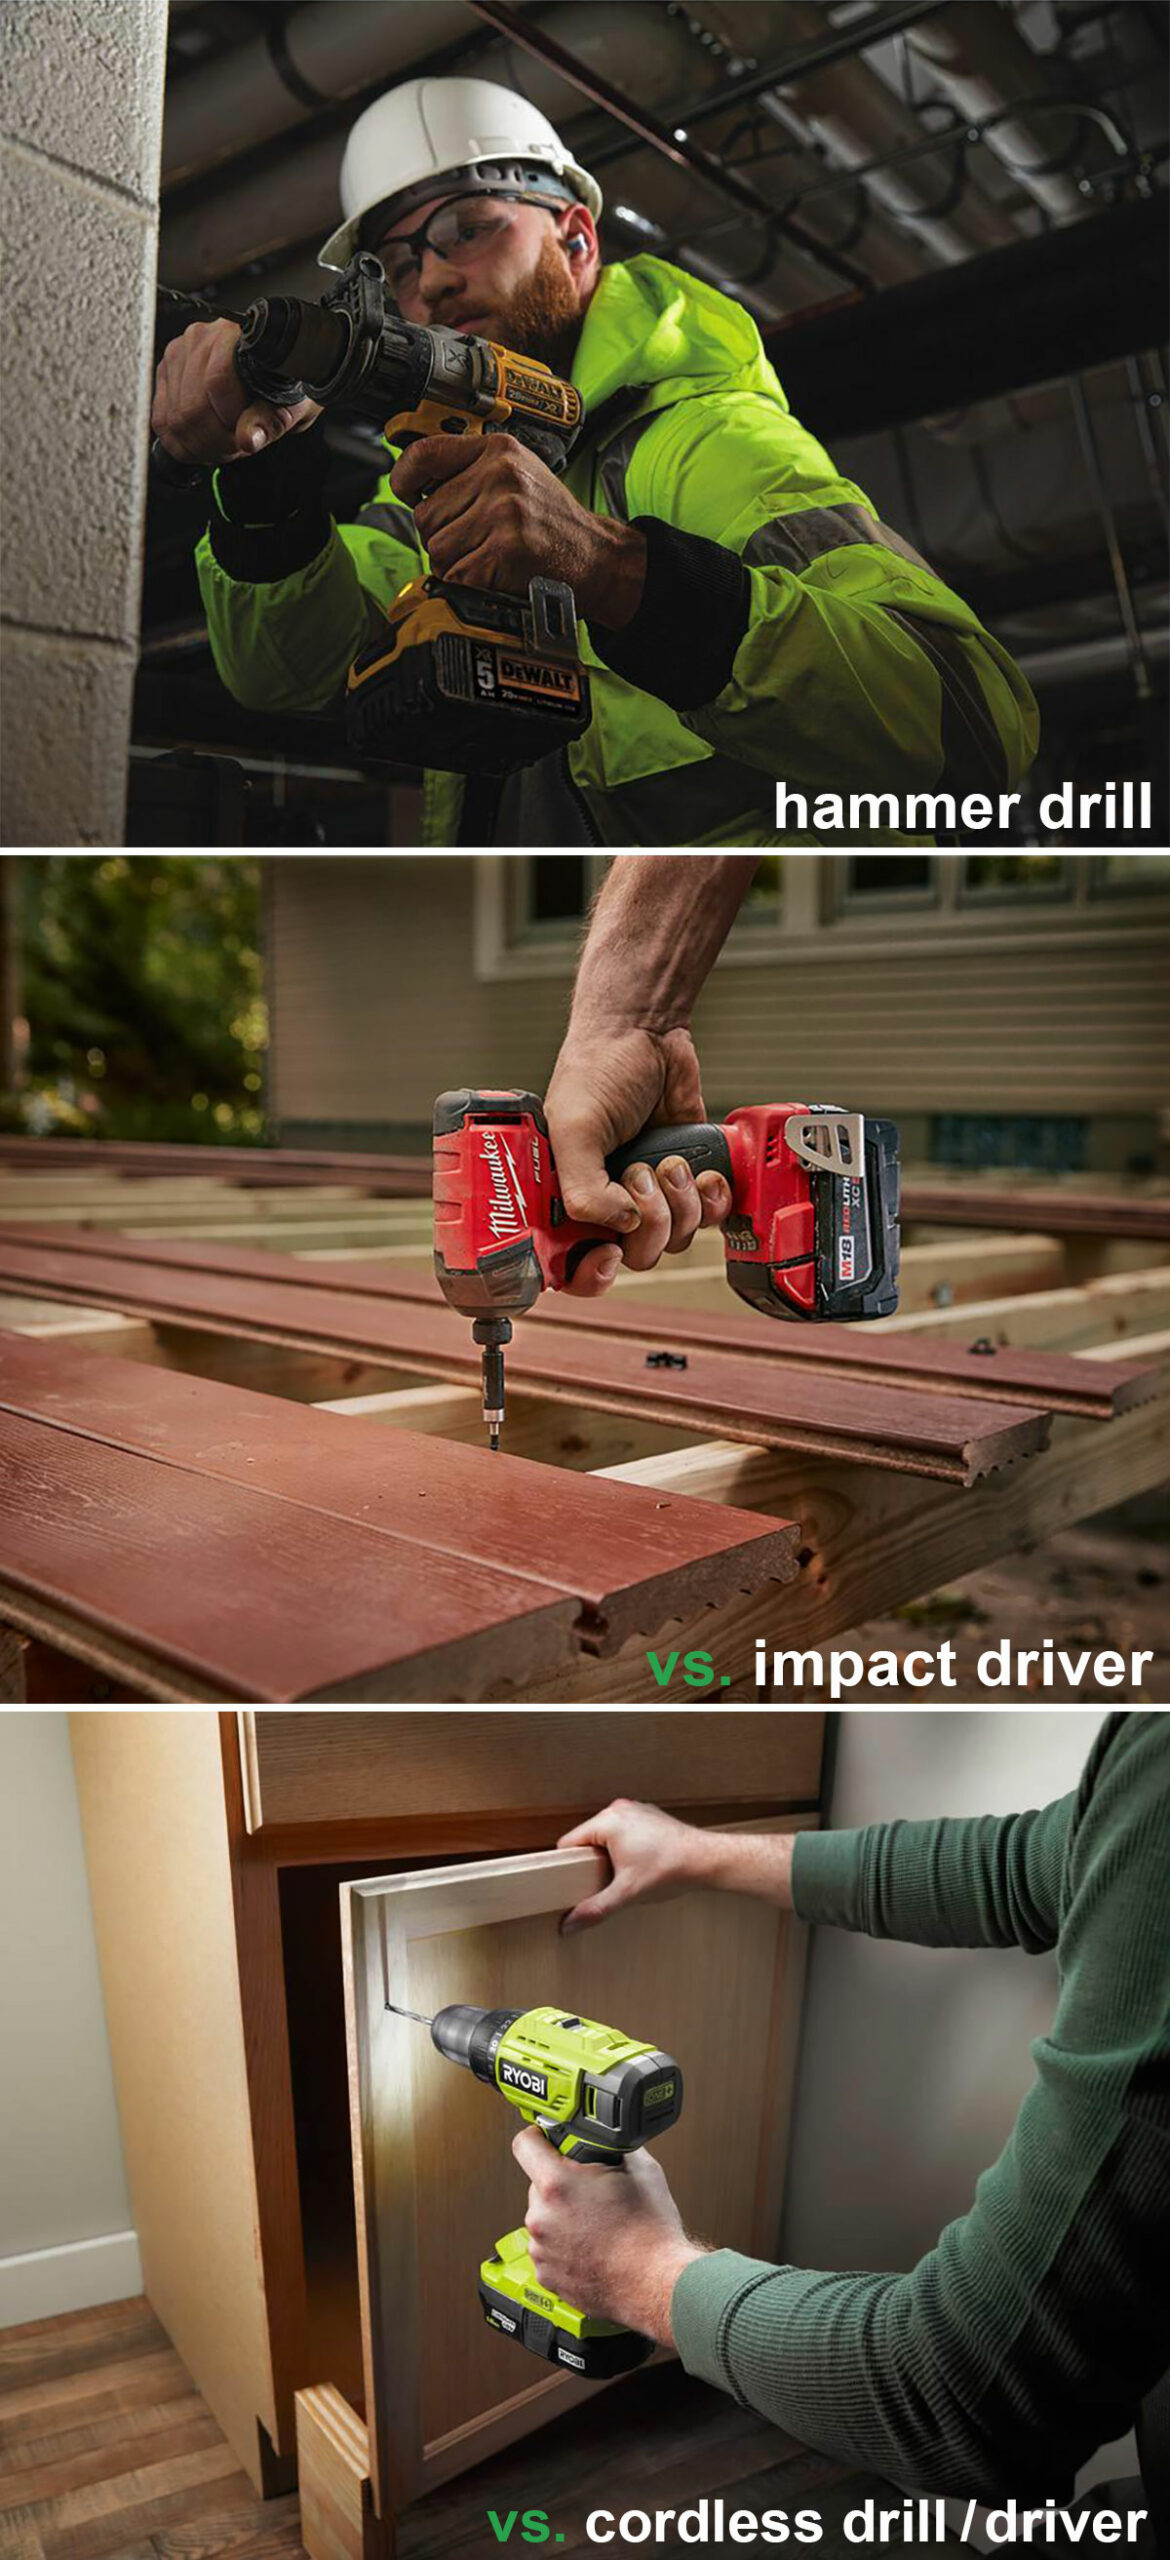 hammer drill vs impact driver vs cordless drill/driver